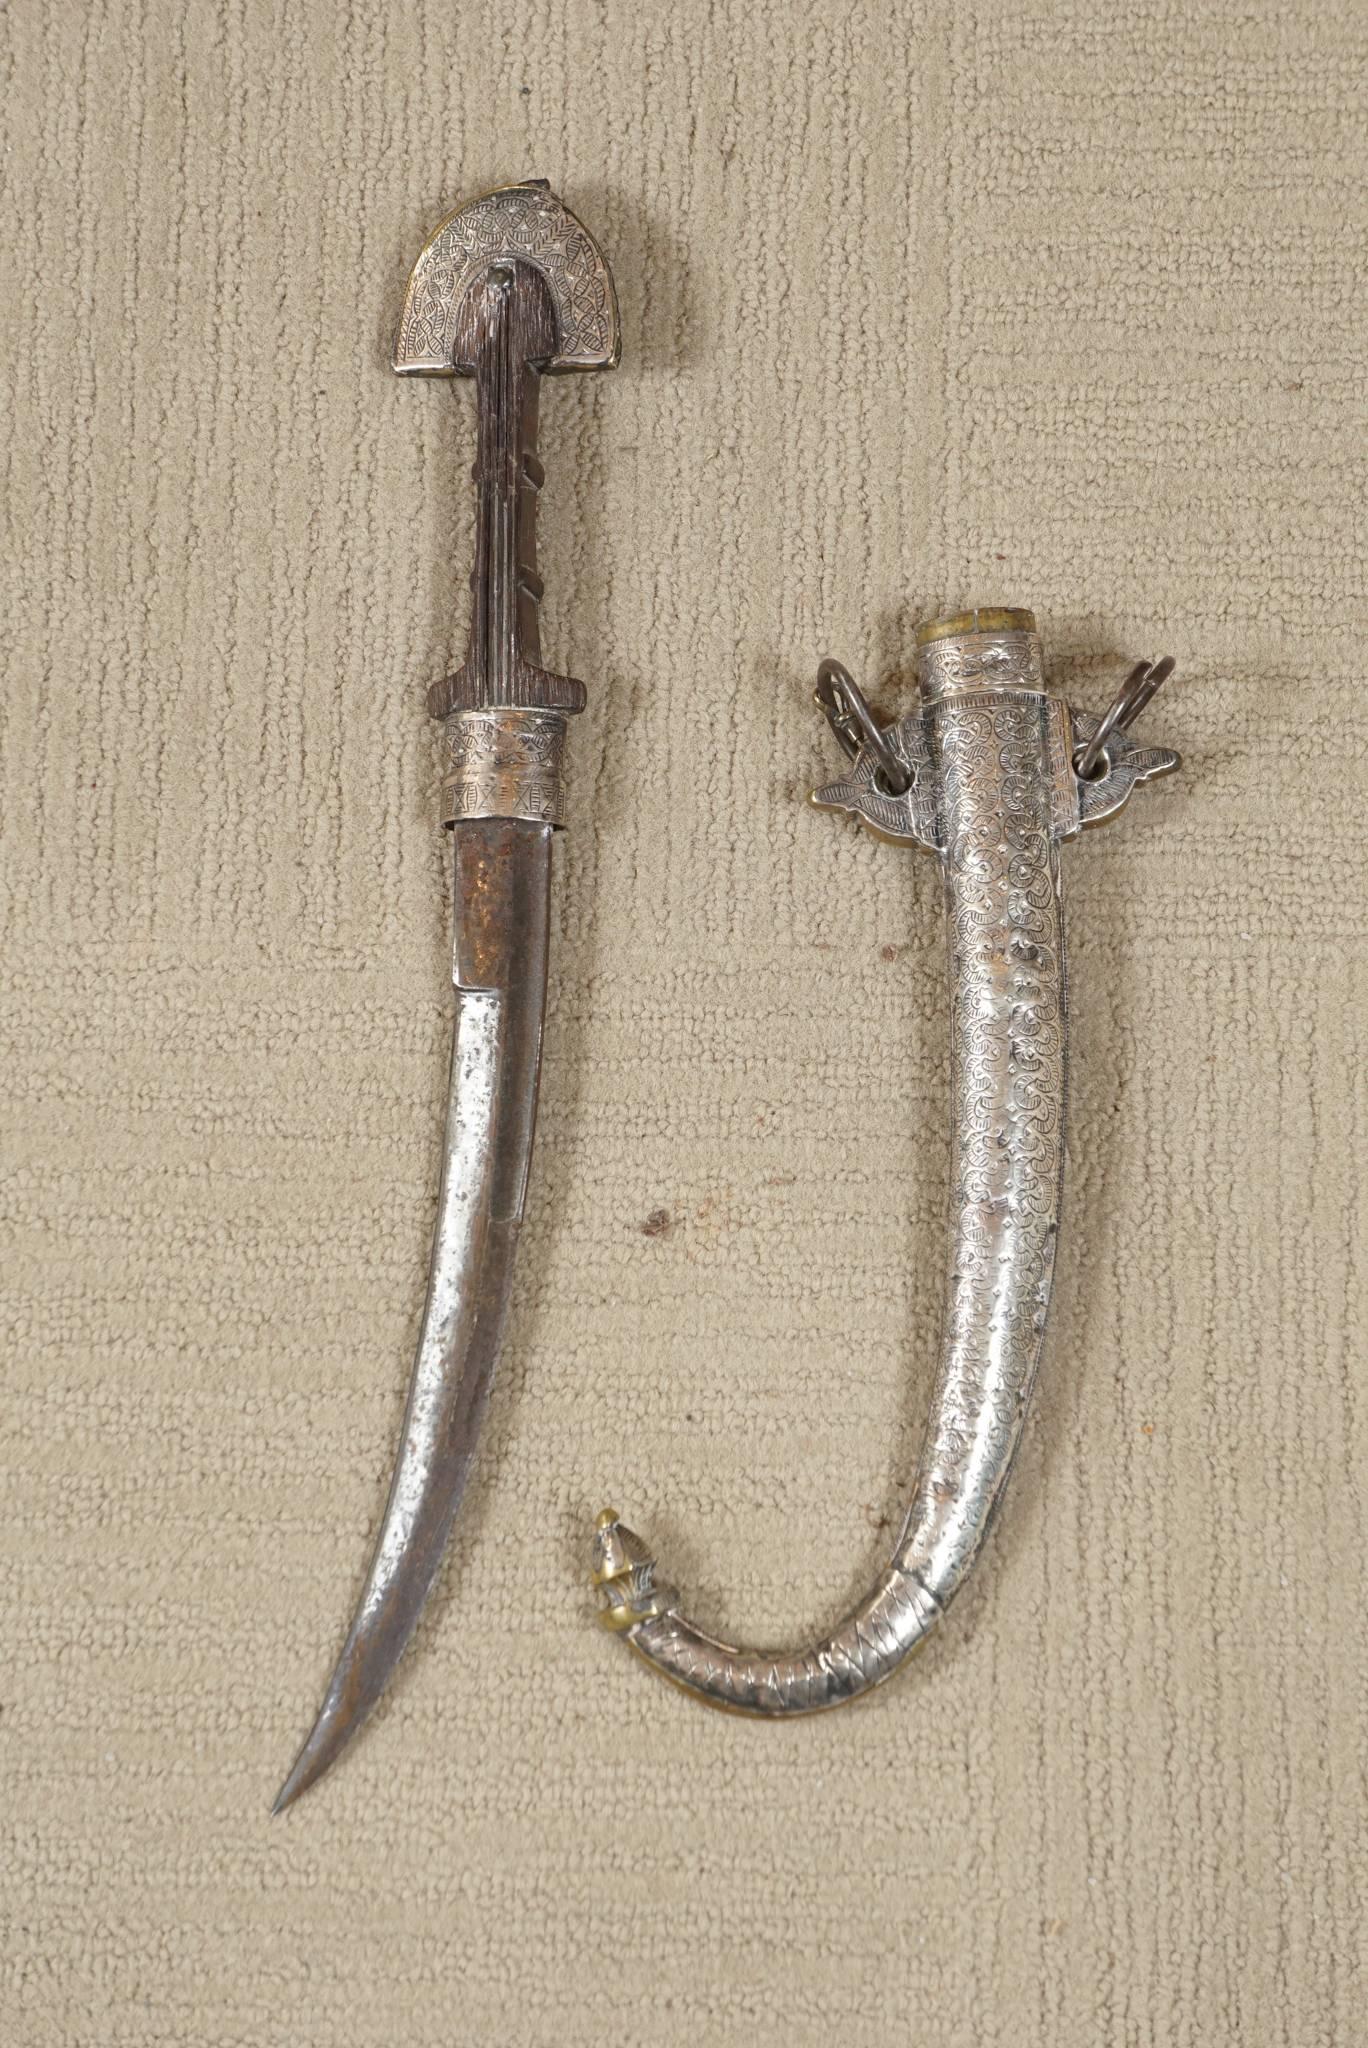 19th century Syrian dagger, with elaborate silver sheath, wooden handle.